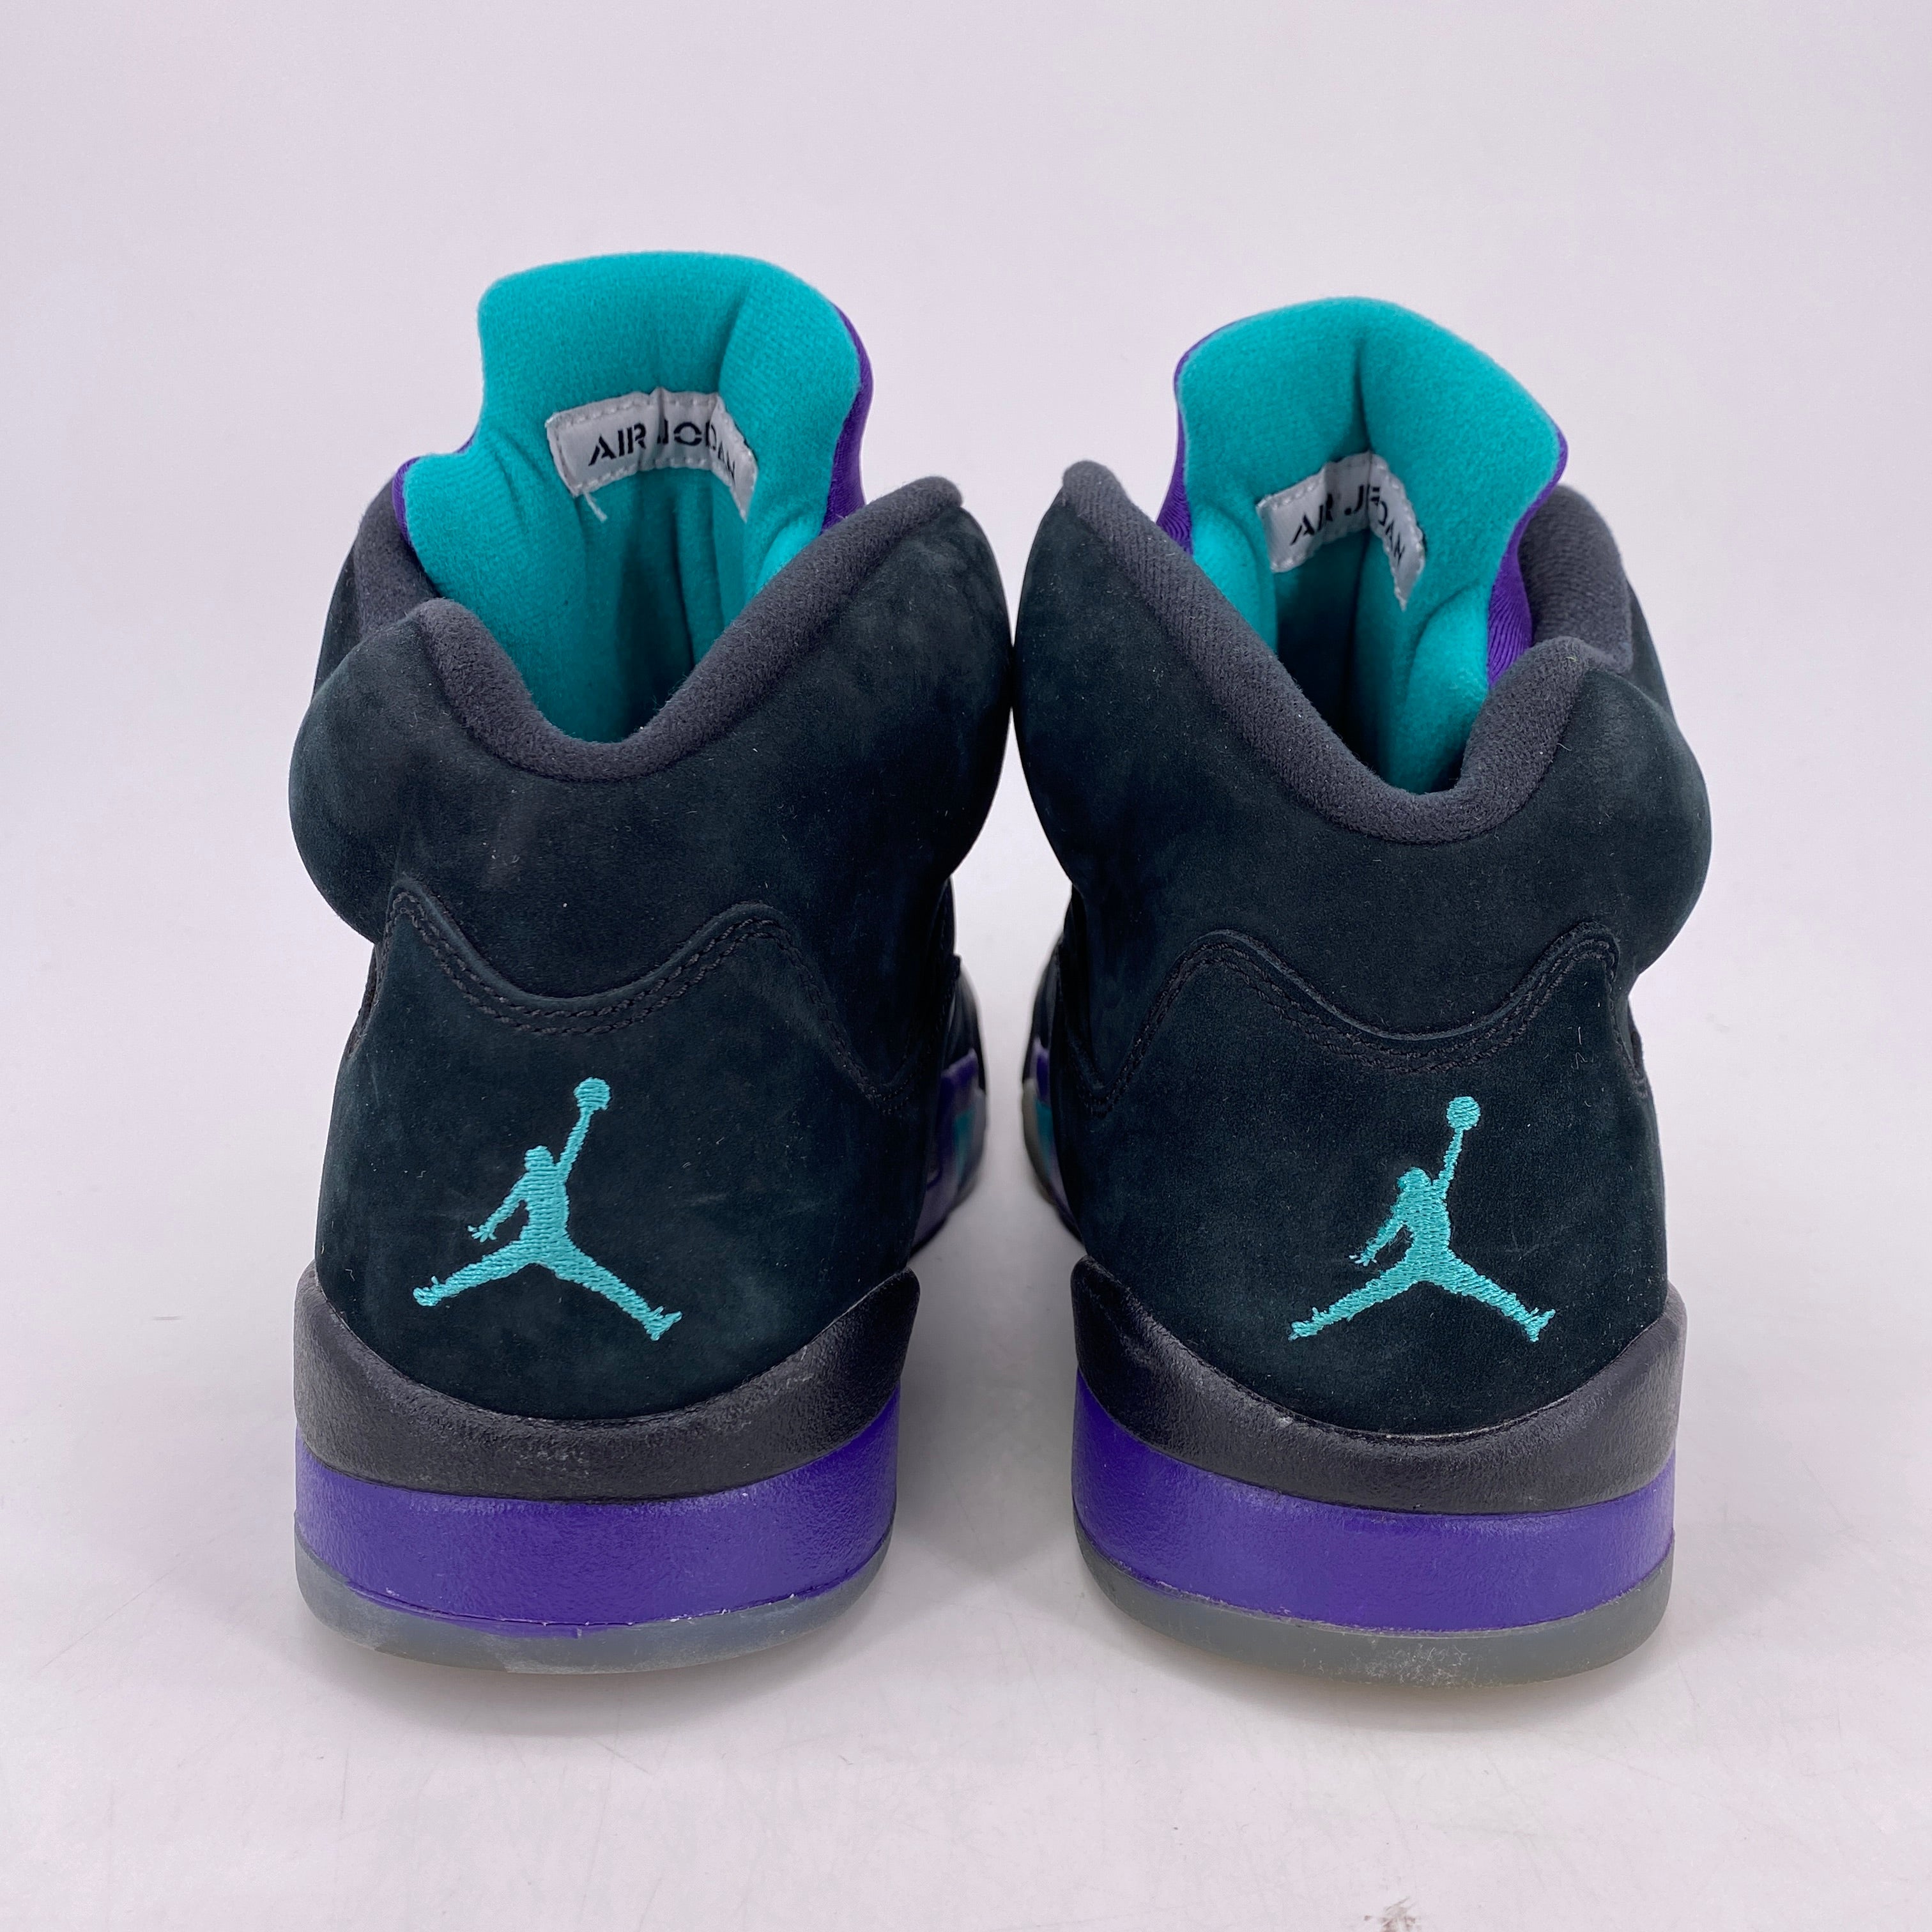 Air Jordan 5 Retro &quot;Black Grape&quot; 2013 Used Size 9.5